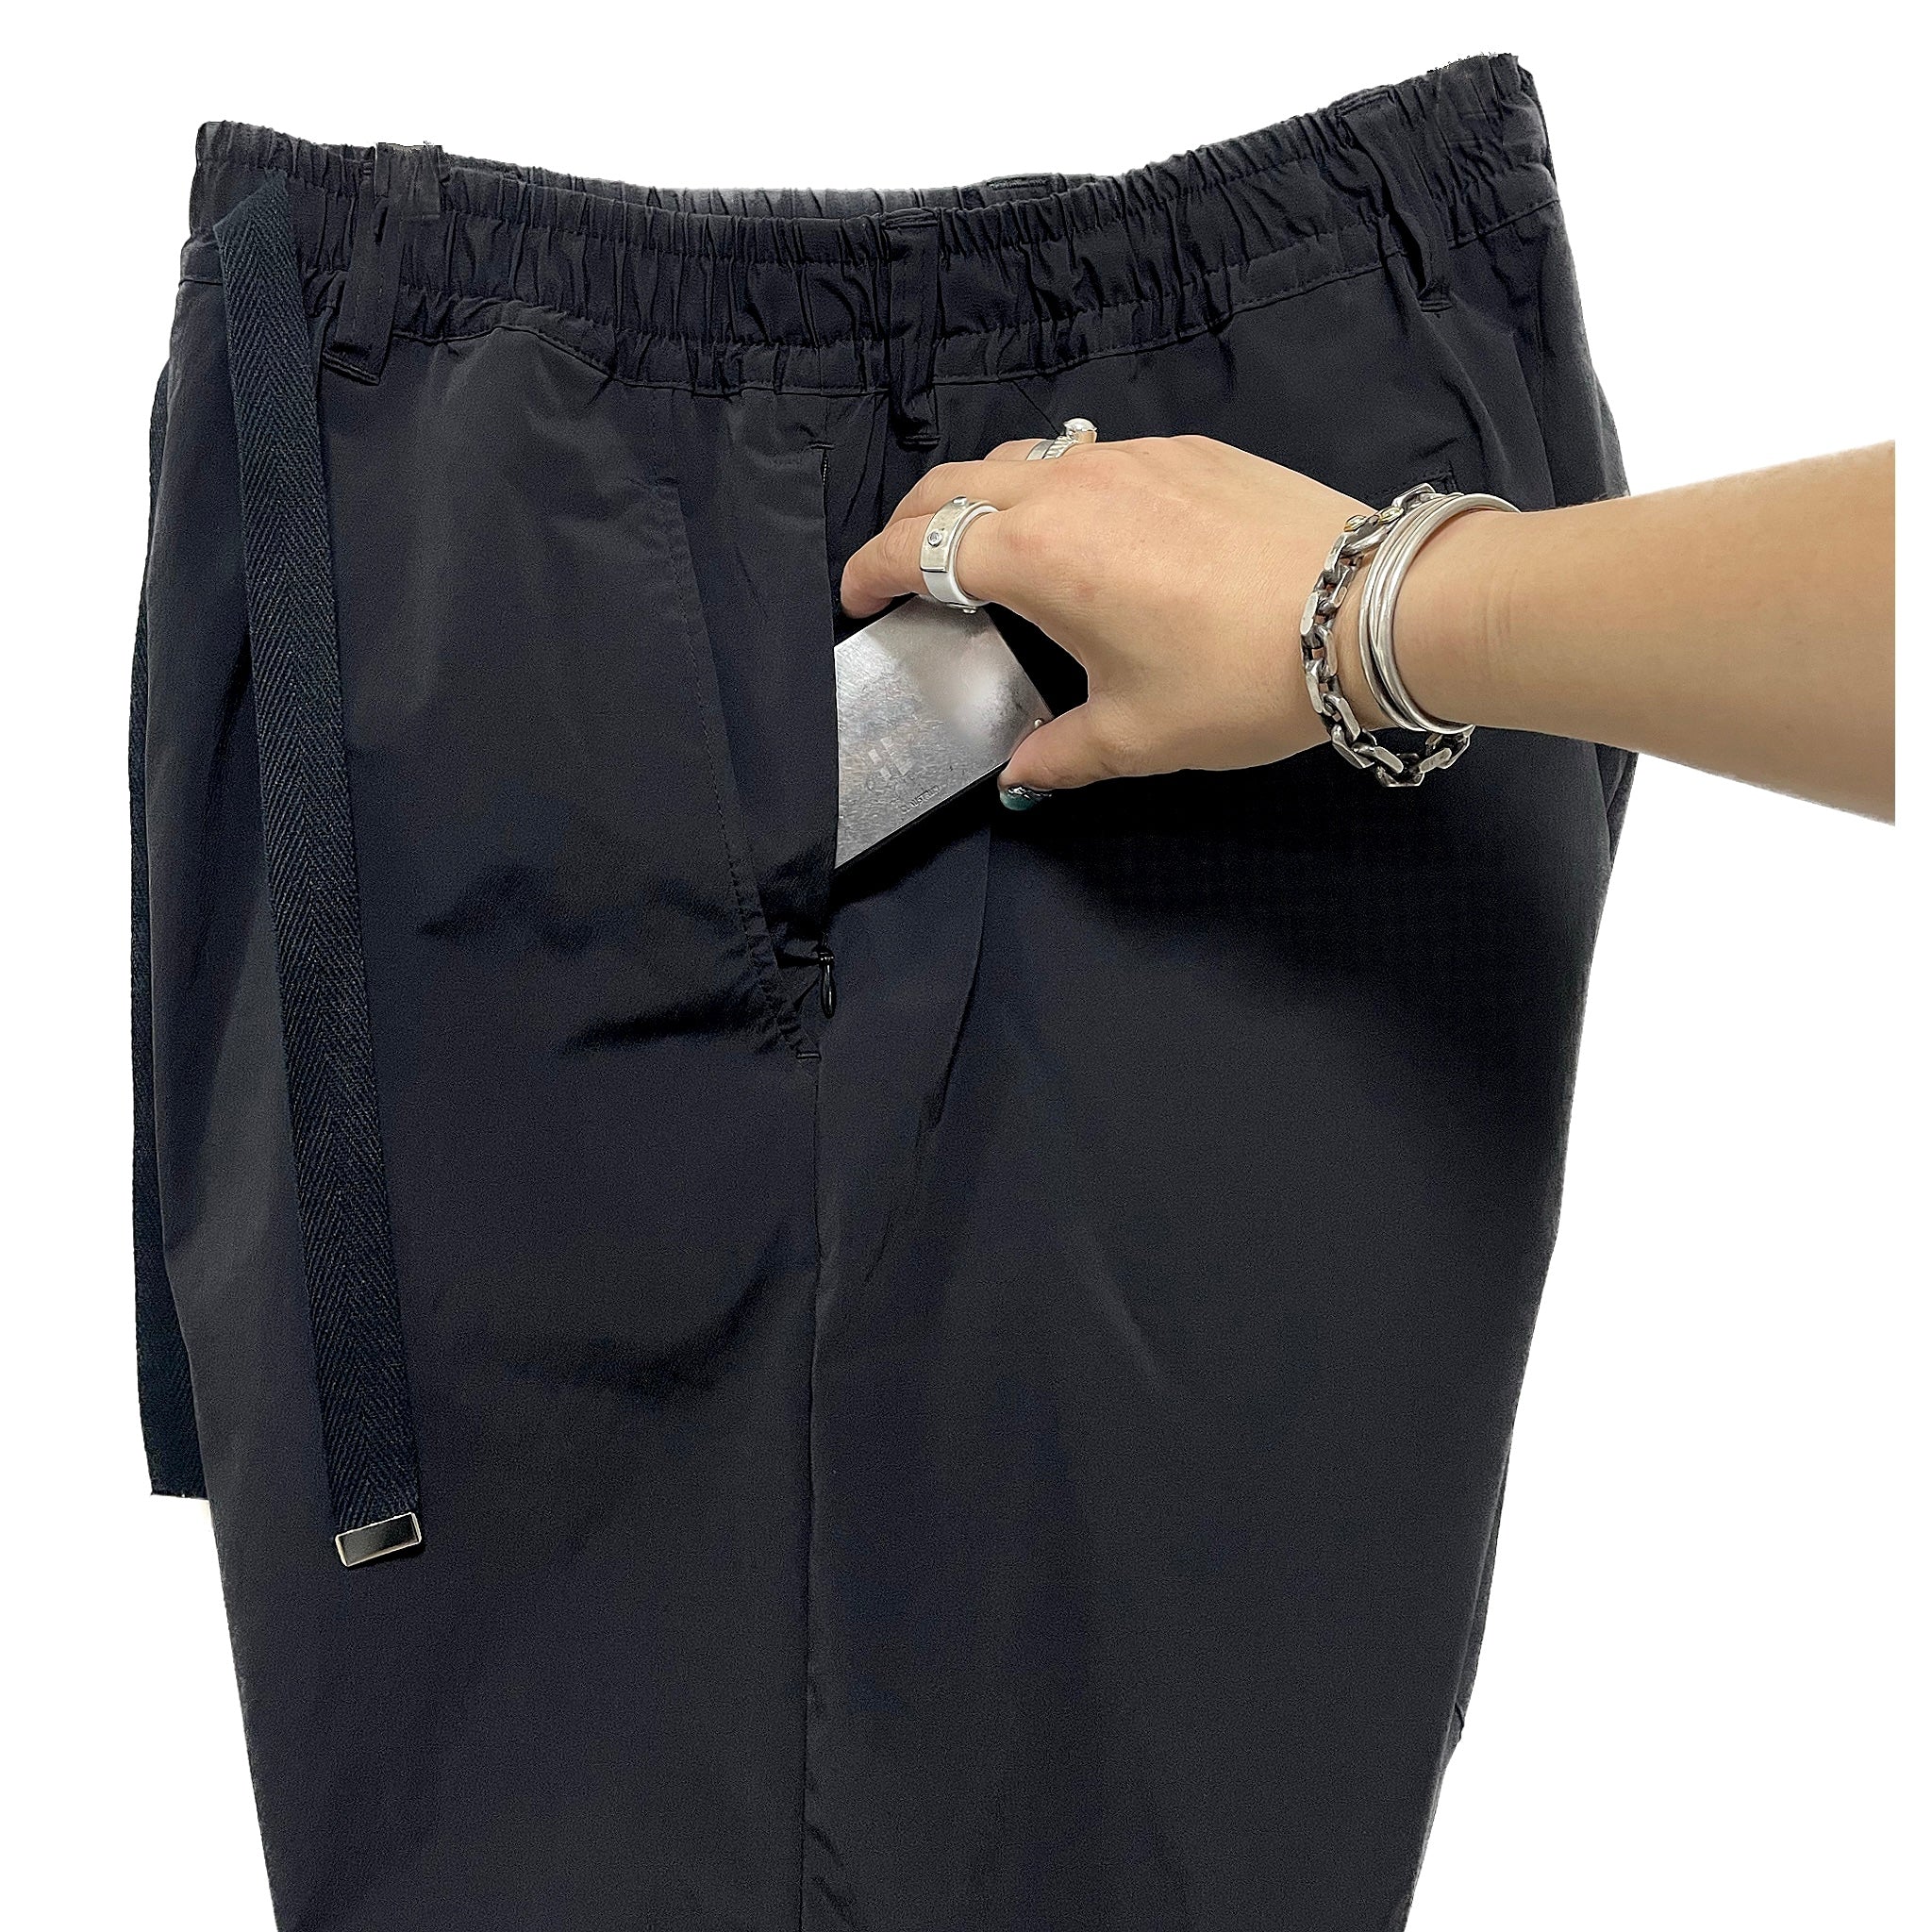 Dropcrotch shorts | HLVTC®